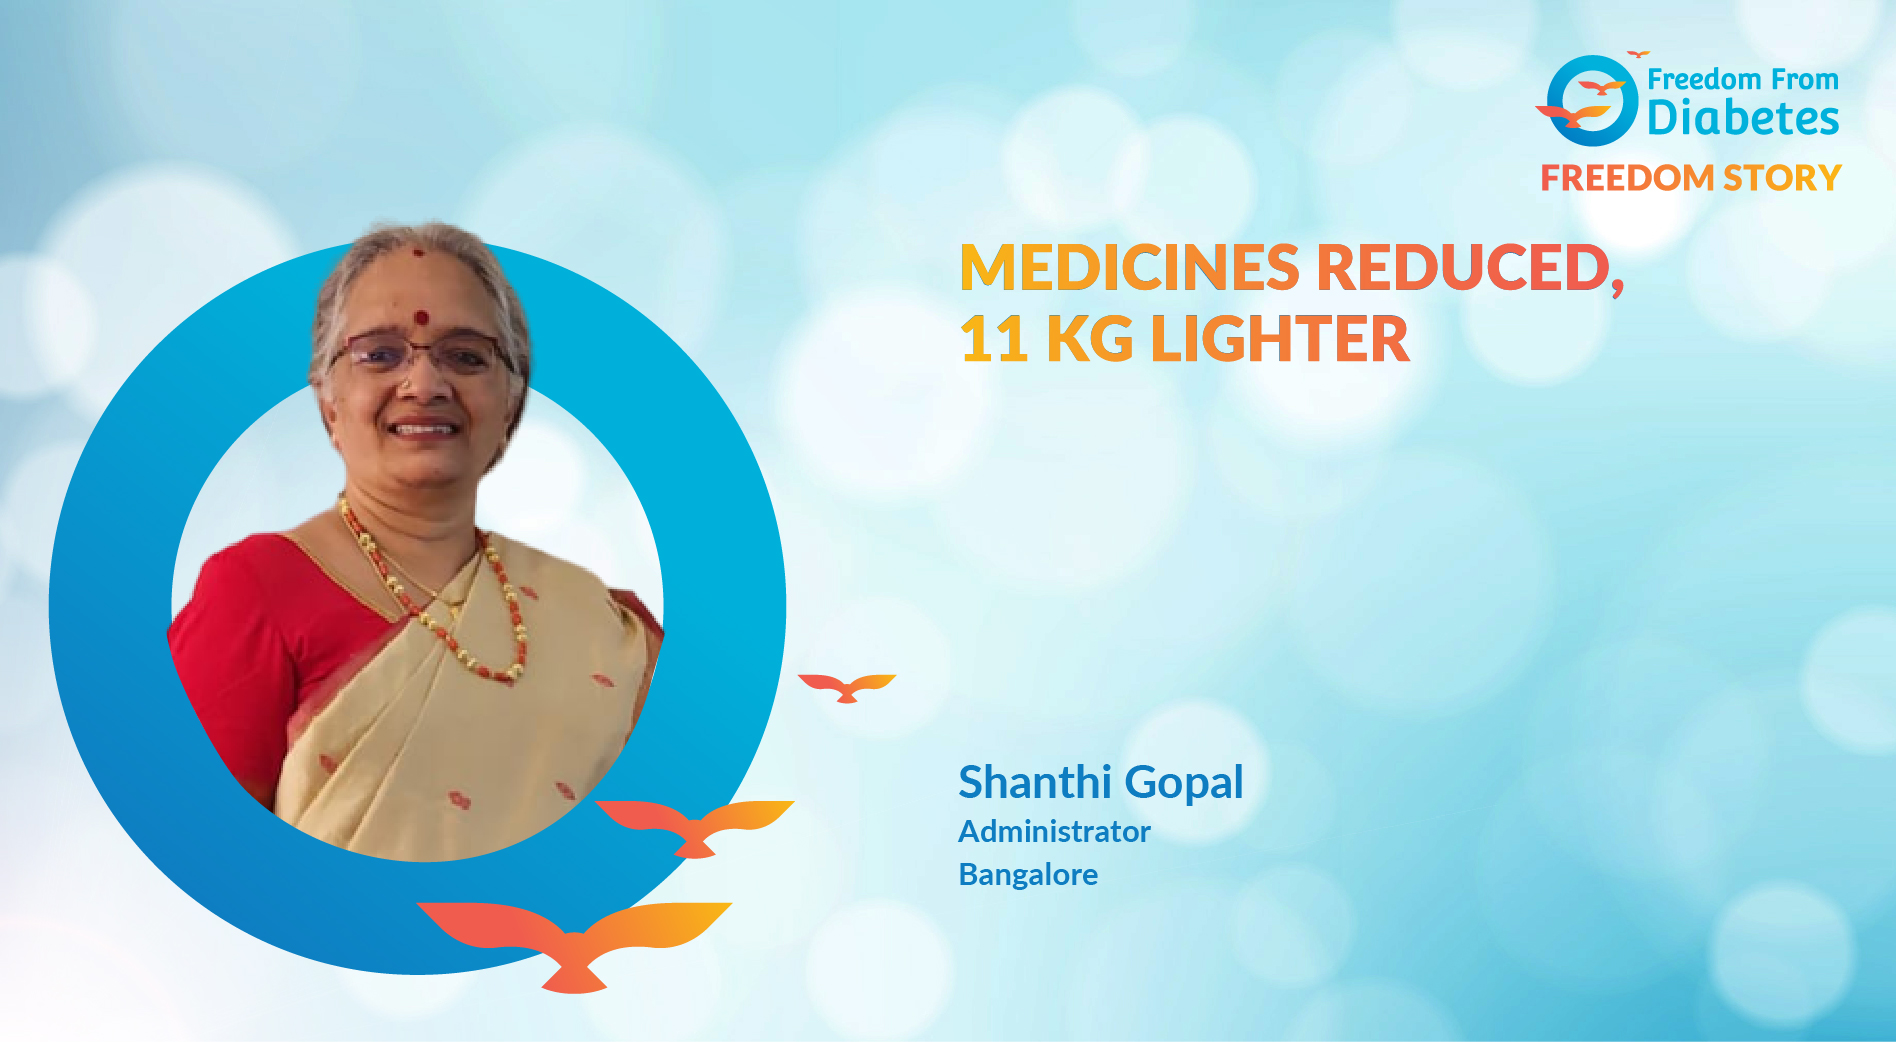 Shanthi Gopal: Motivational weight loss story